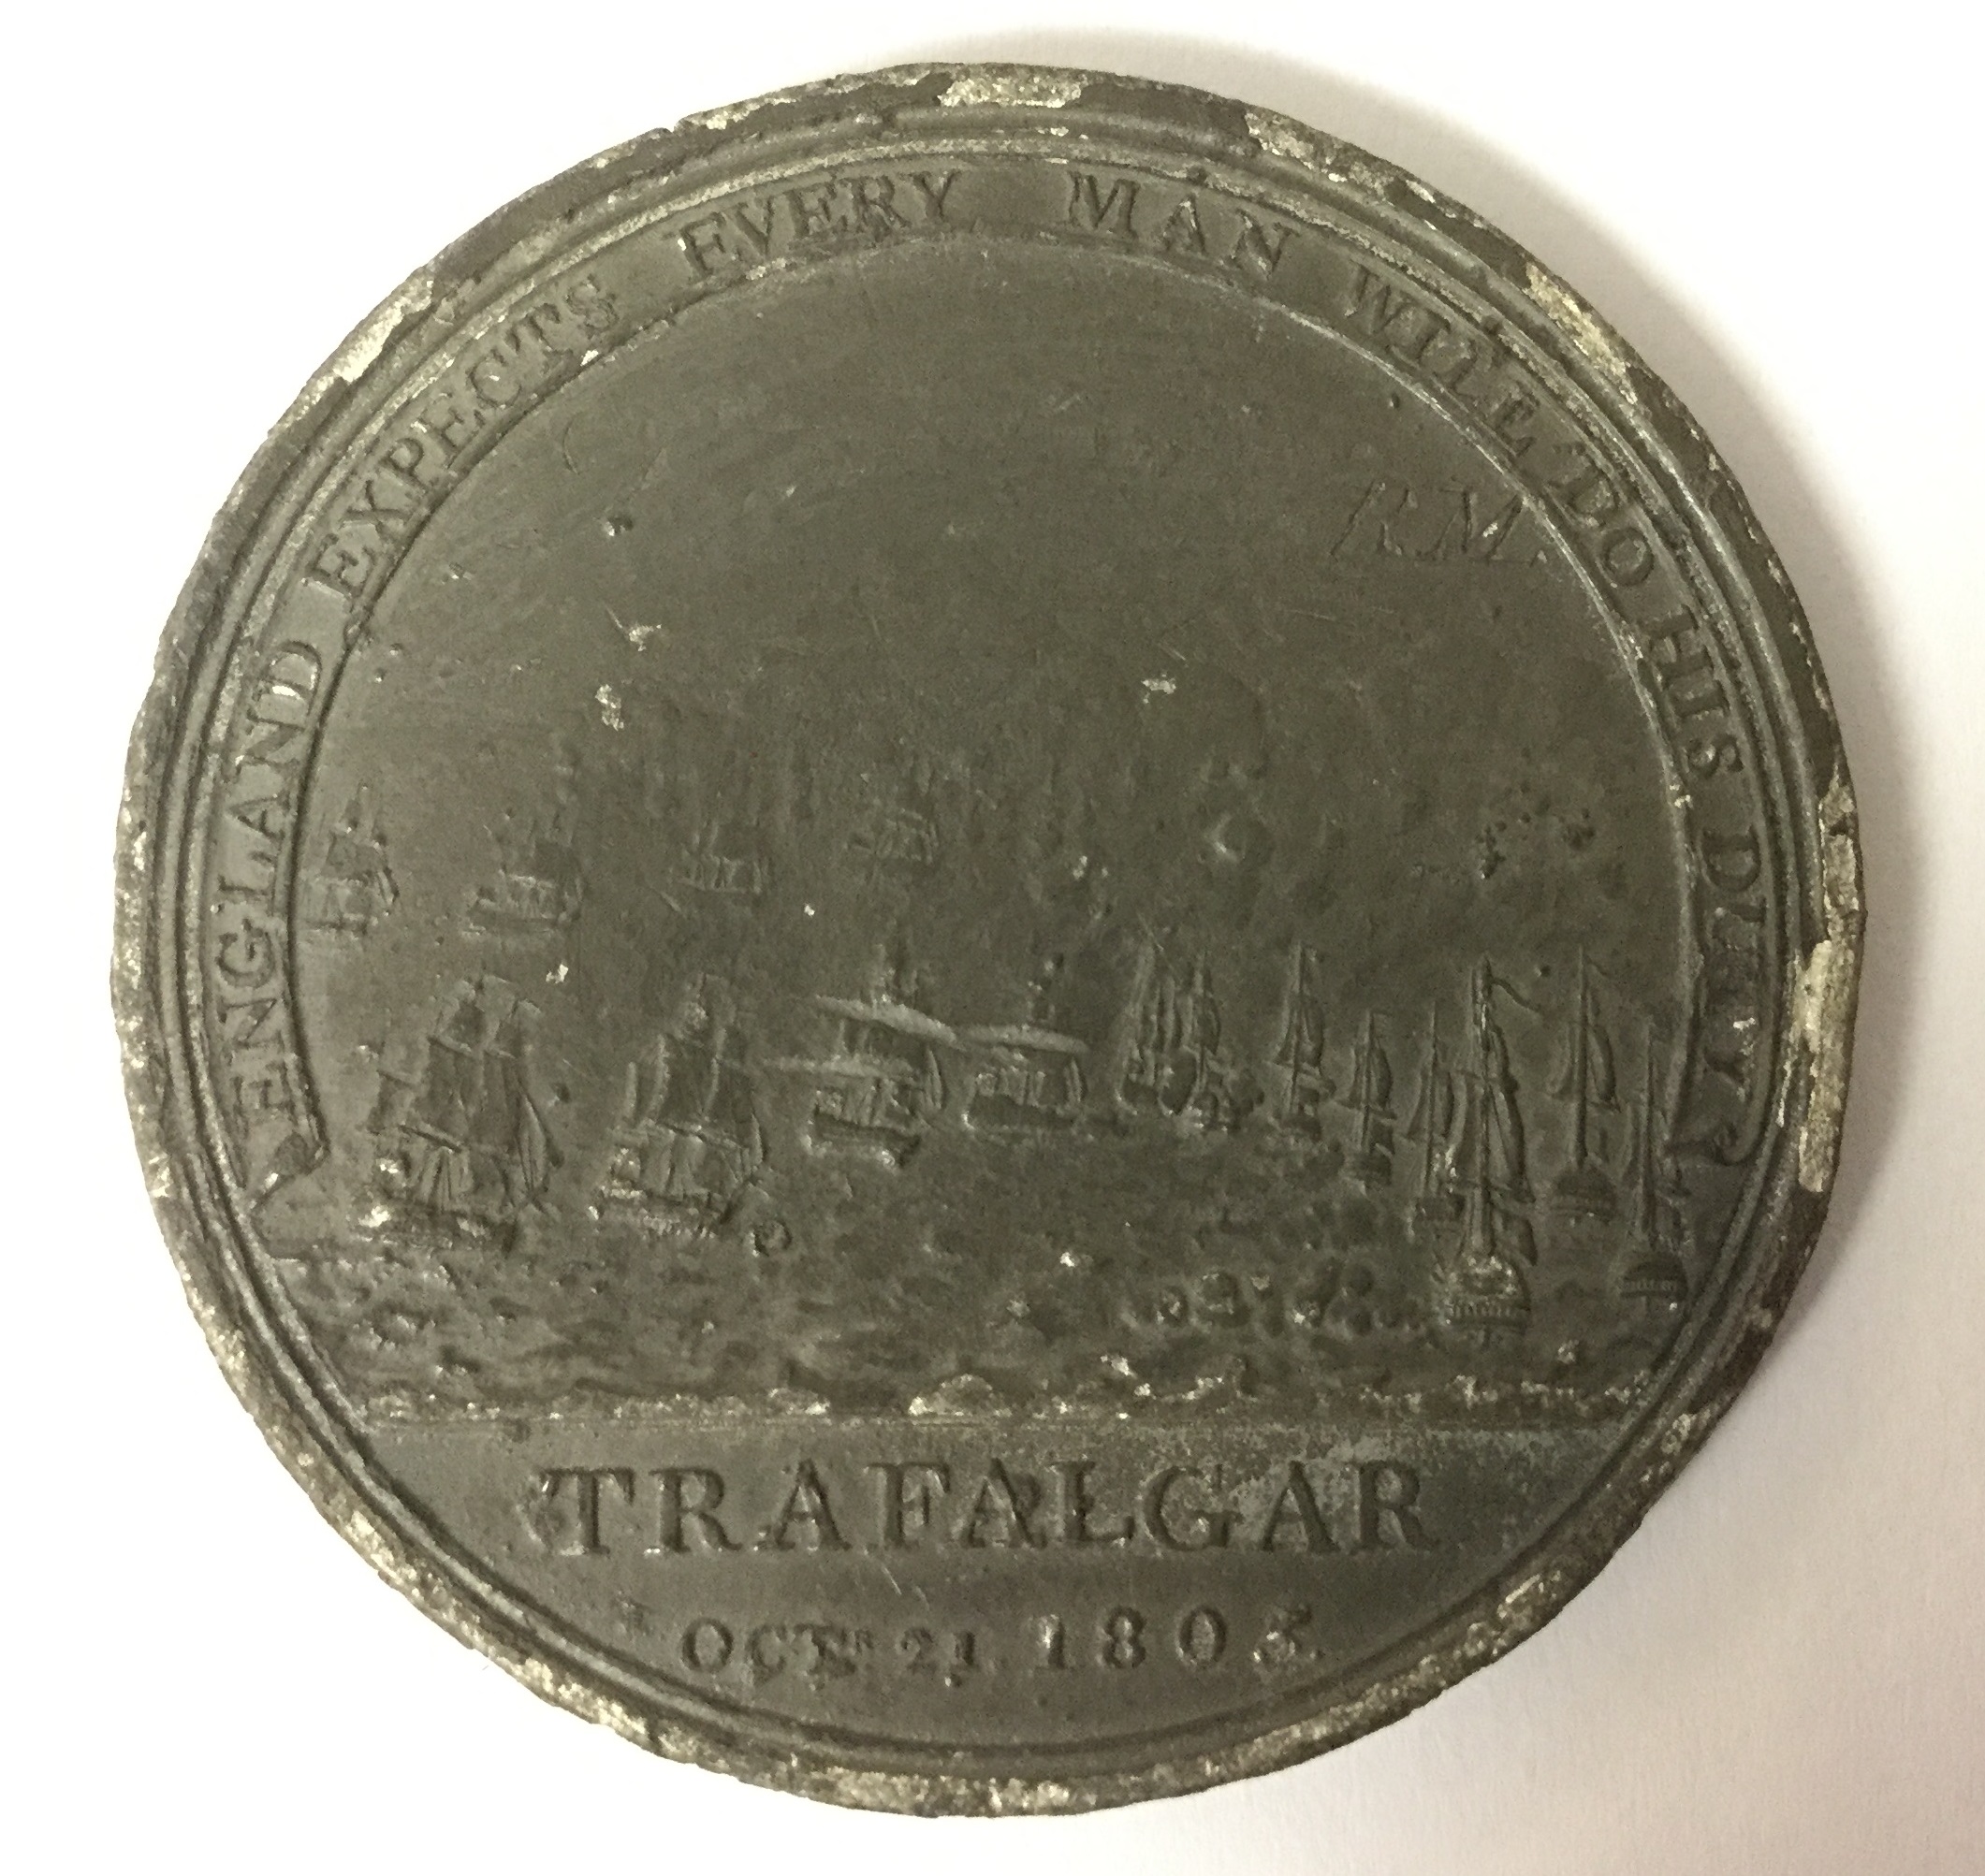 Boulton's Trafalgar Medal in white metal (Pewter). Has engraved initials to reverse "RM". - Image 3 of 4